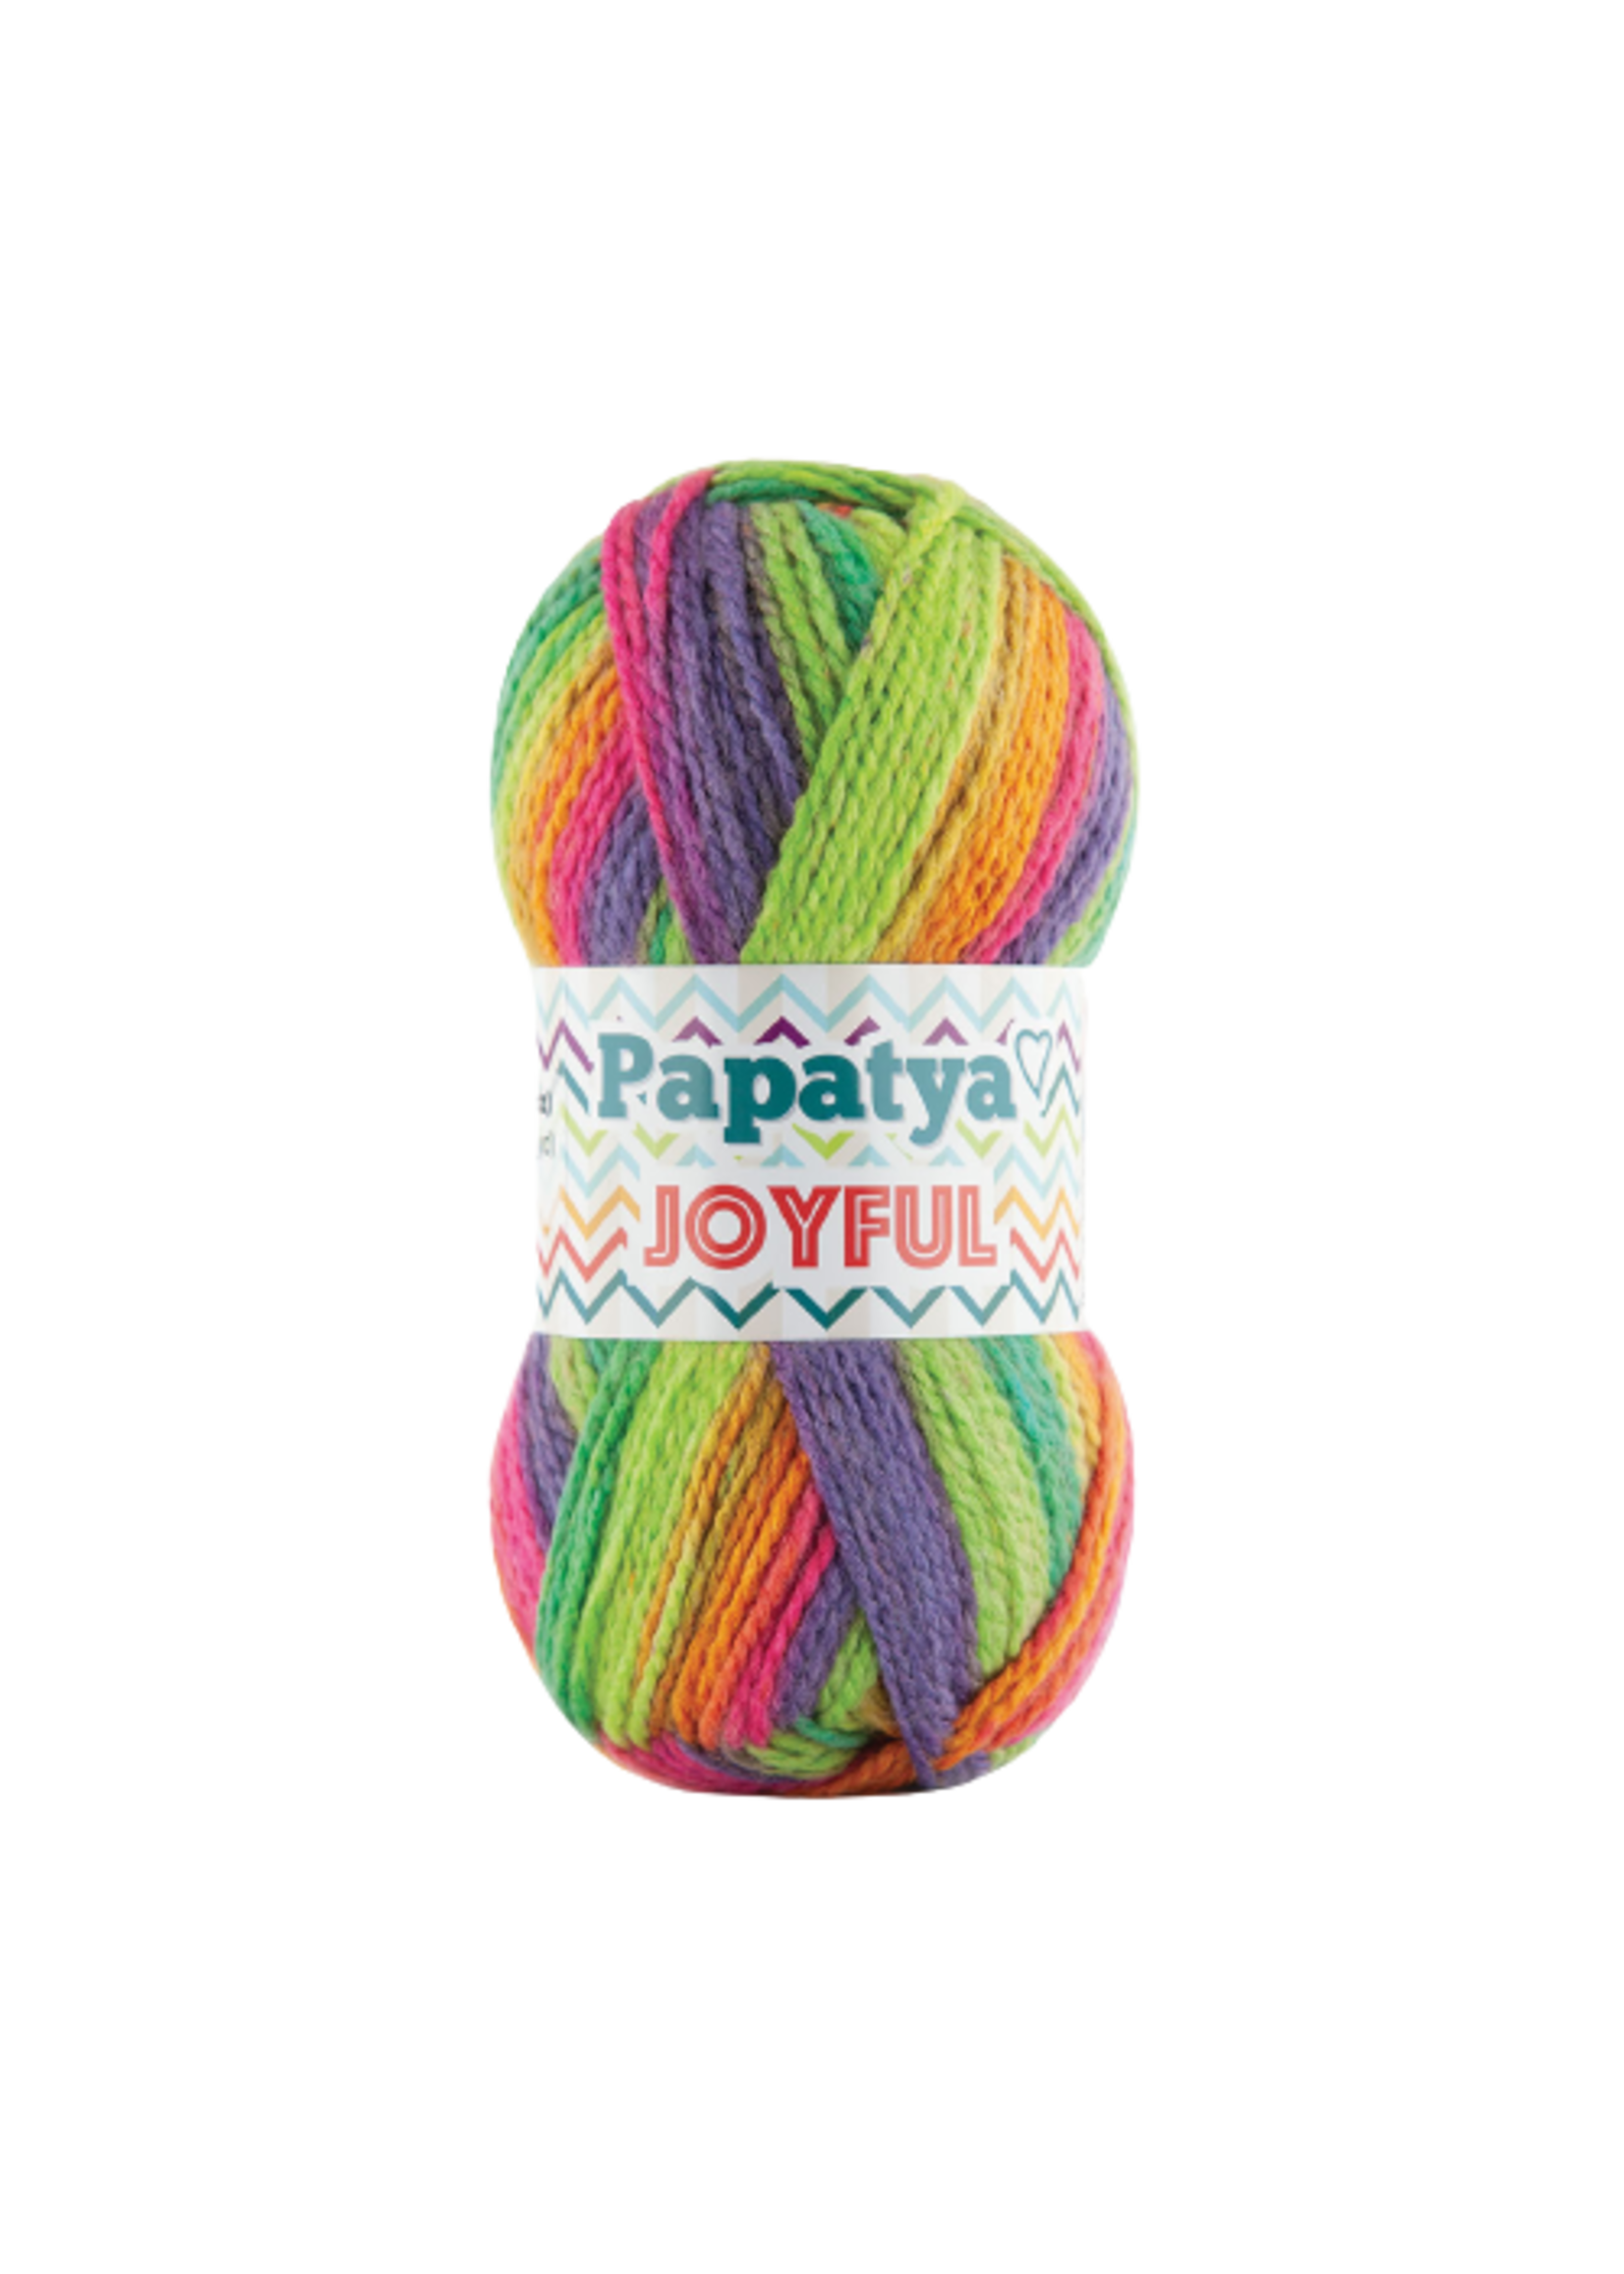 Papatya Papatya Joyful - 16